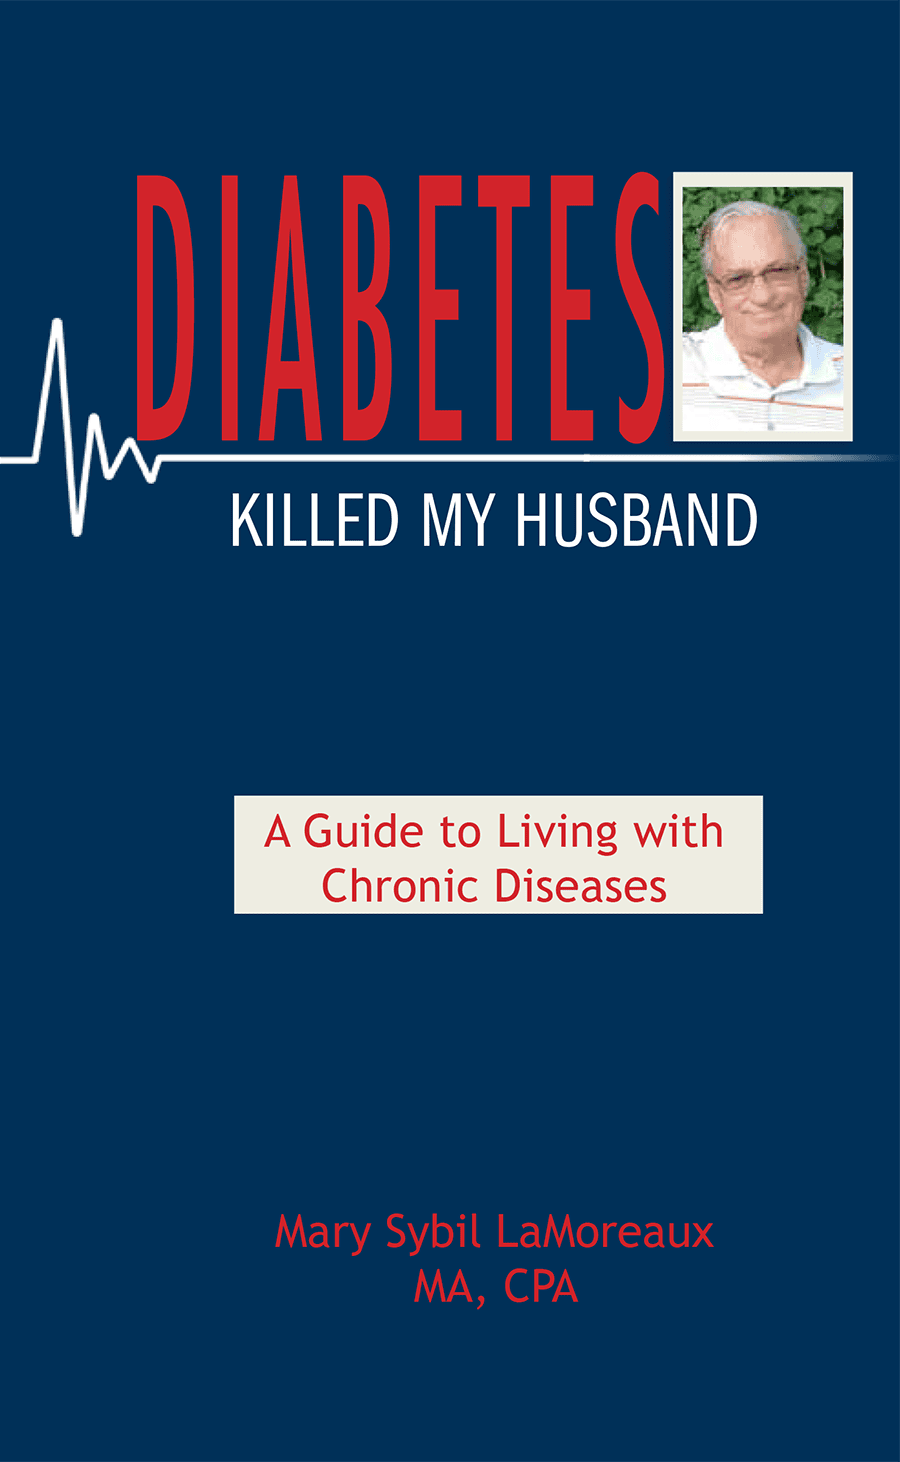 Diabetes Killed My Husband